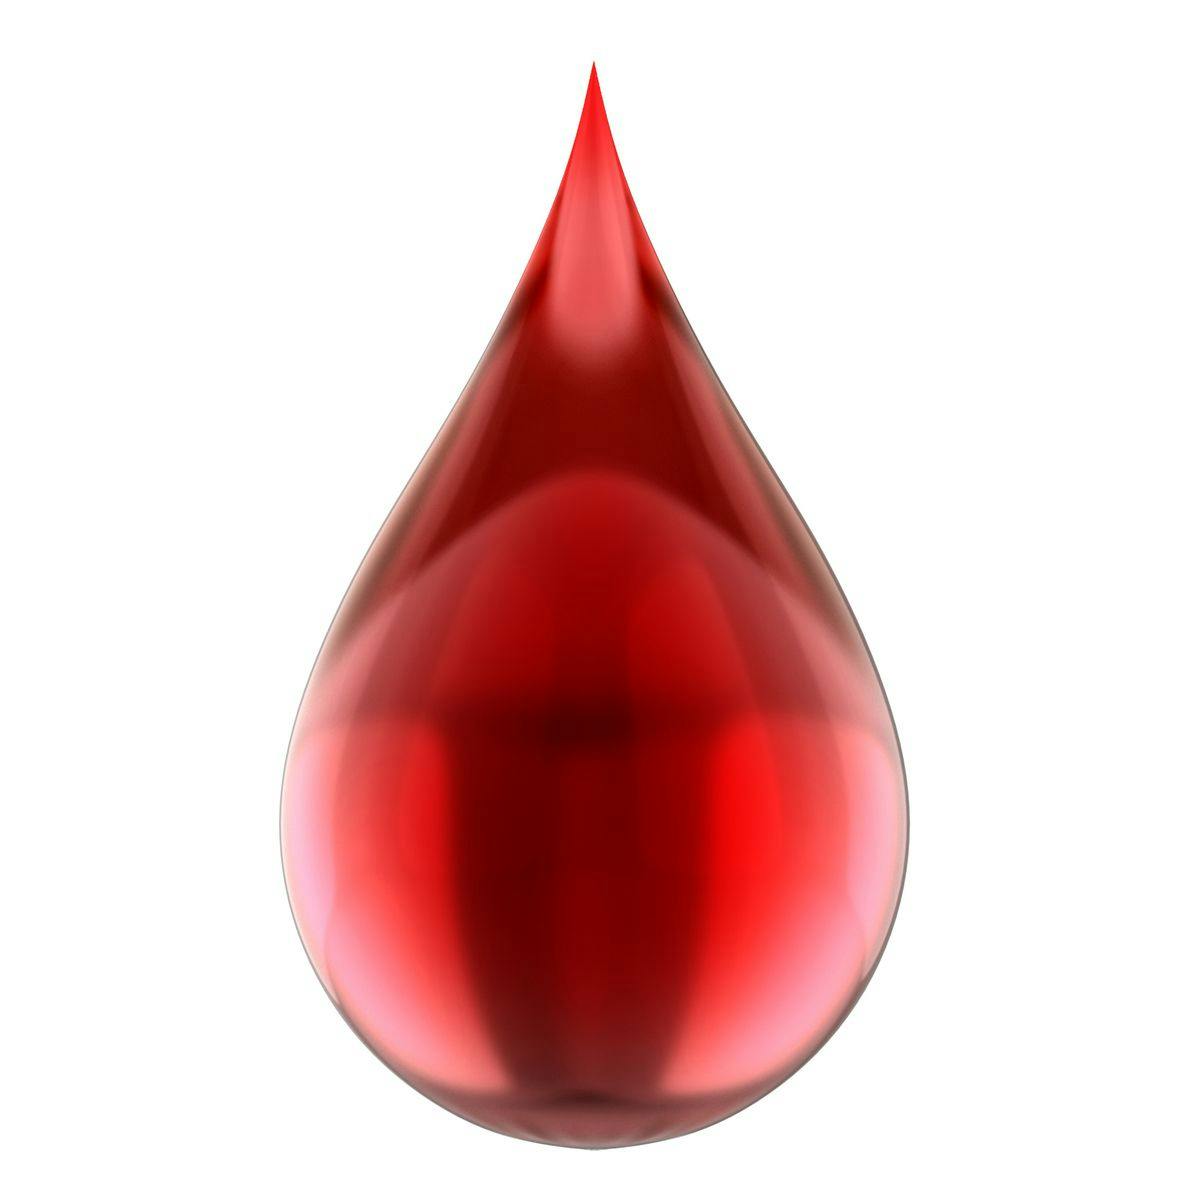 image of blood droplet